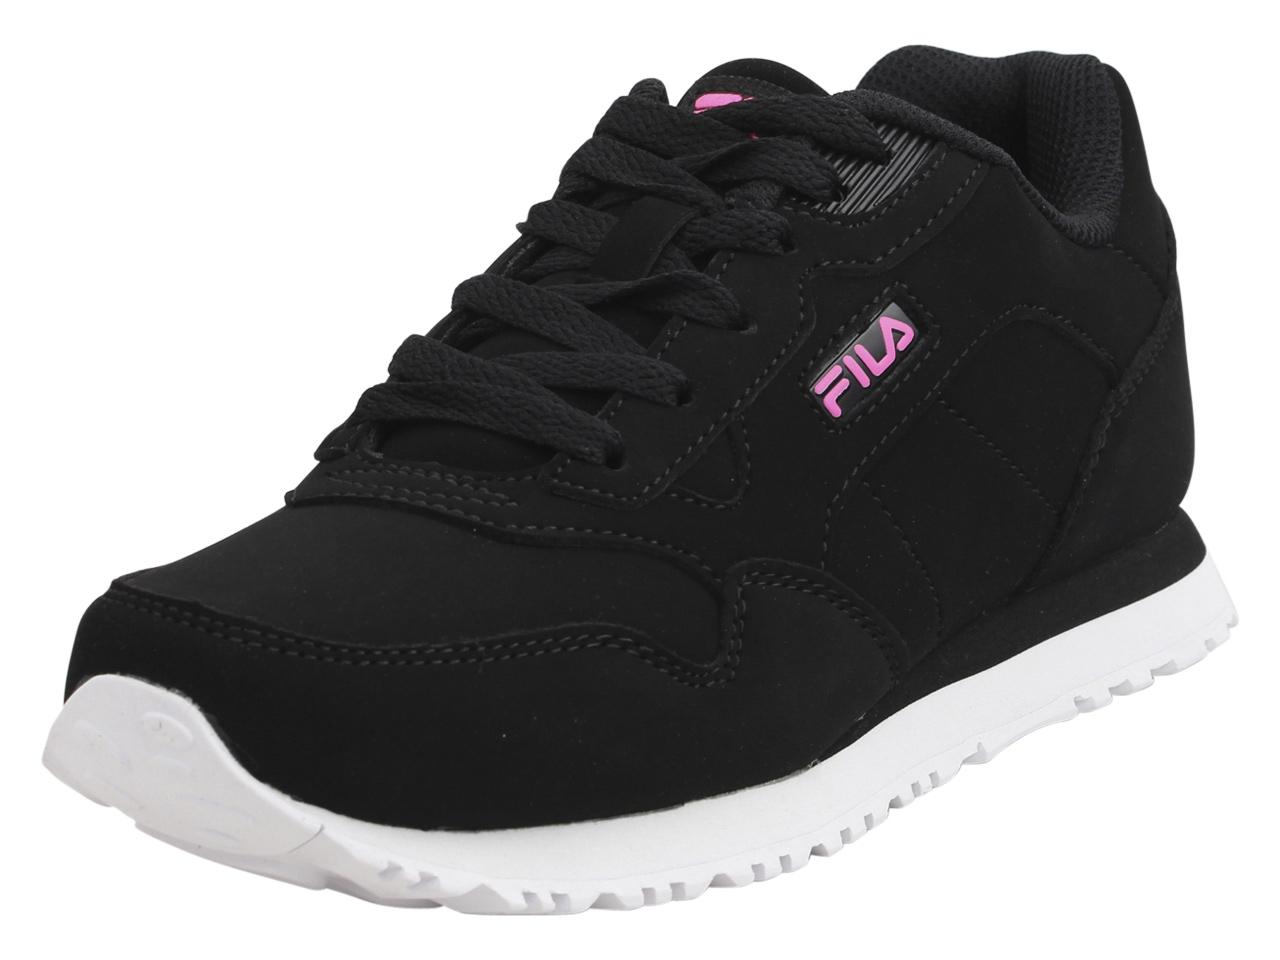 Fila Women's Cress Sneakers Shoes - Black/Knock Out Pink/White - 7.5 B(M) US